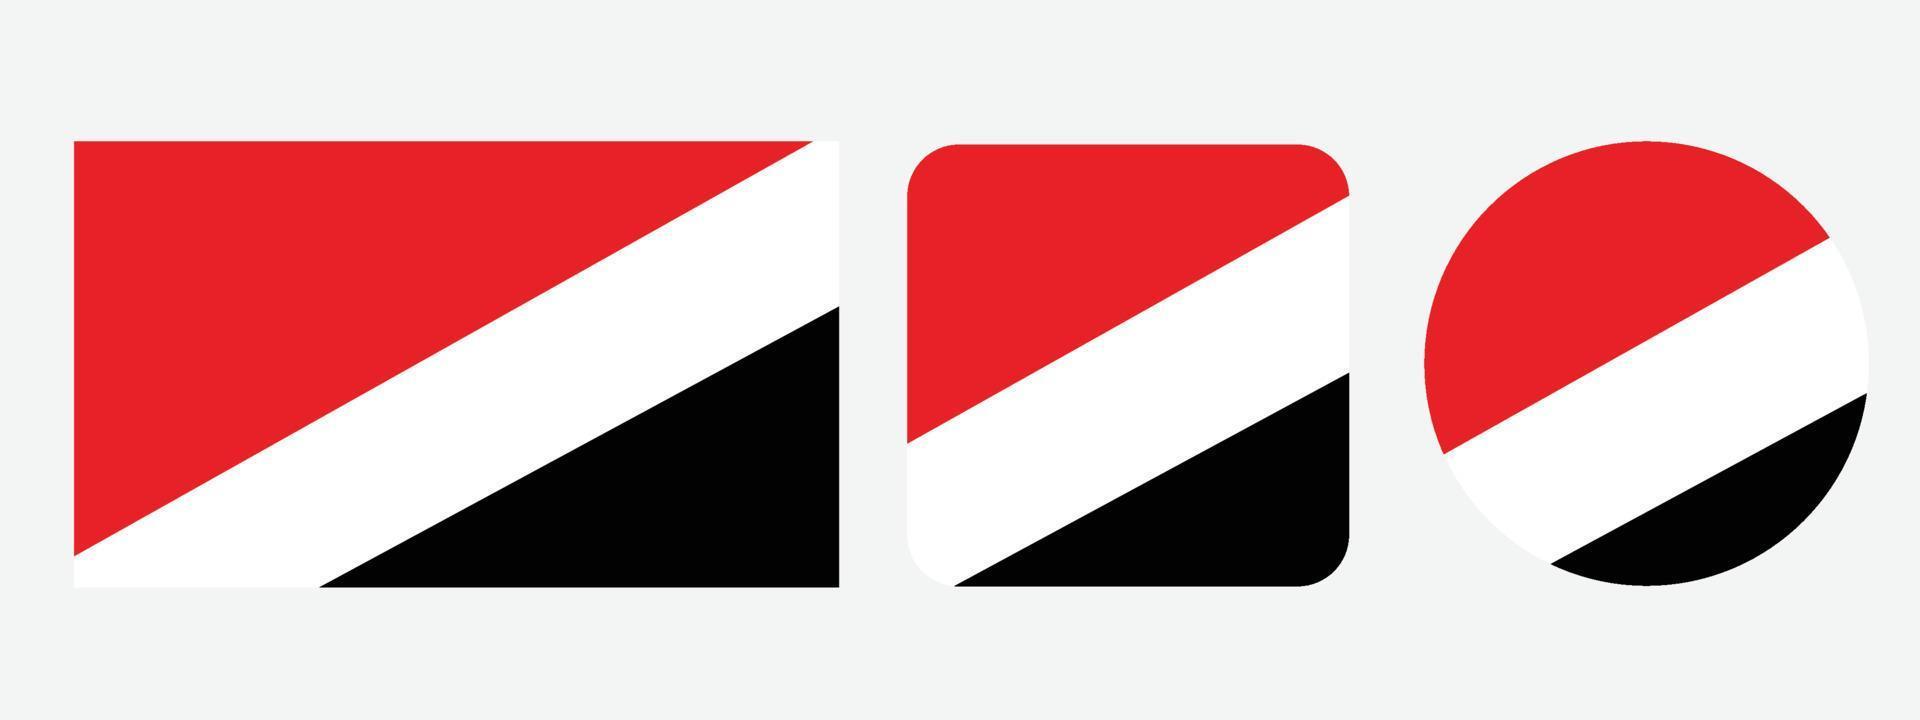 sealand Principality of Sealand flag icon . web icon set . icons collection flat. Simple vector illustration.